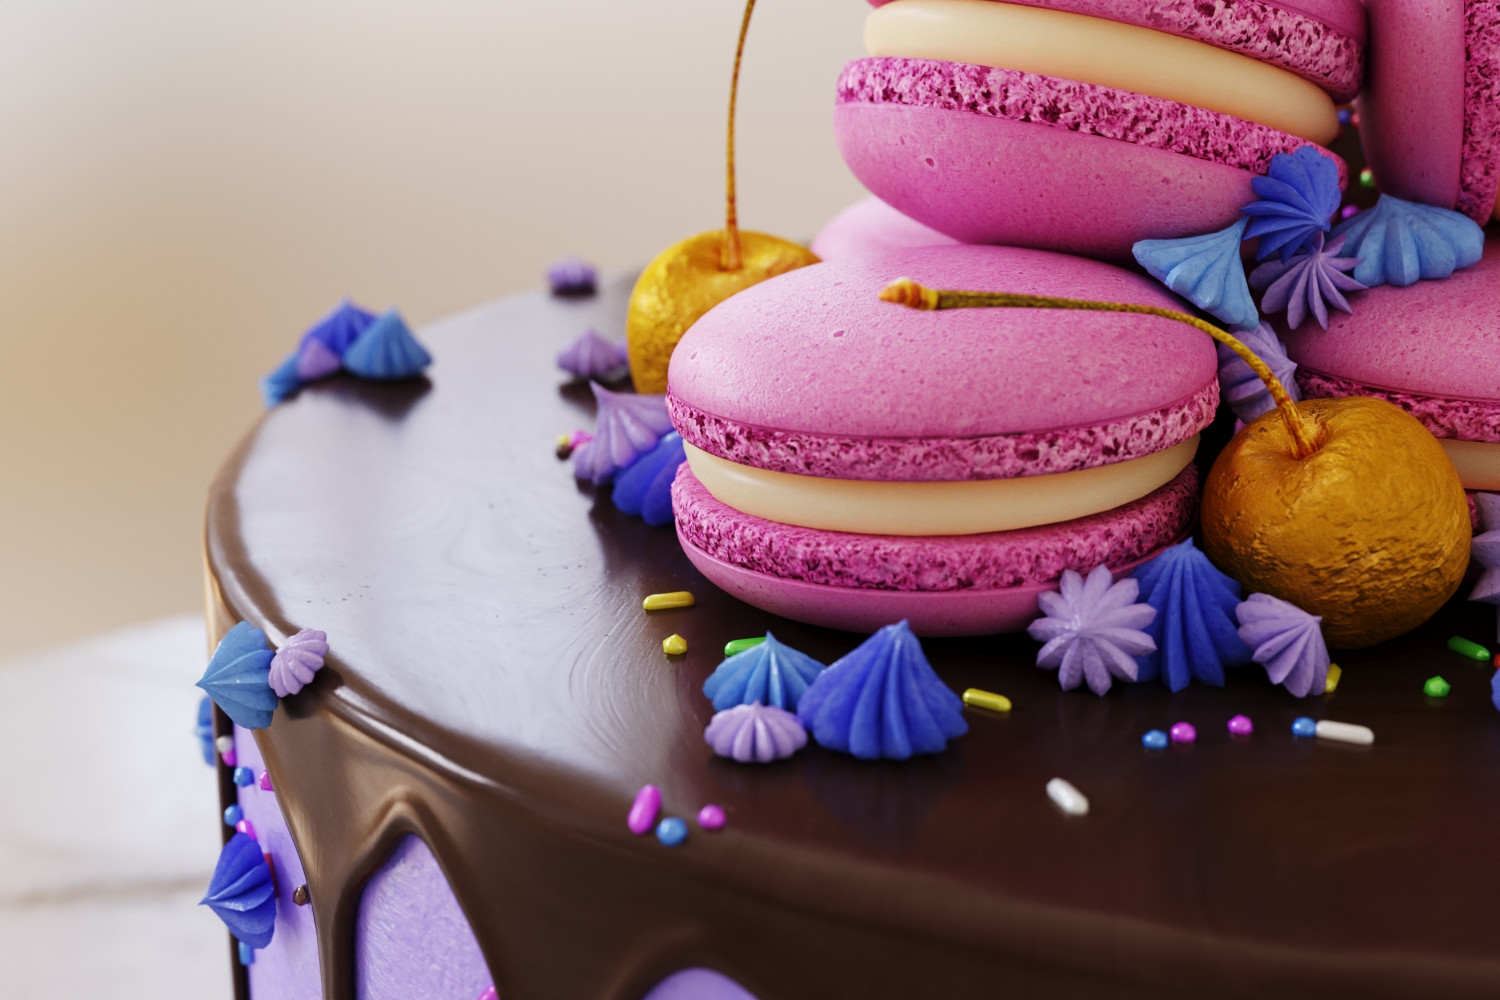 C4D Simple High End Gourmet Cake Food Model Download Decors & 3D Models |  C4D Free Download - Pikbest